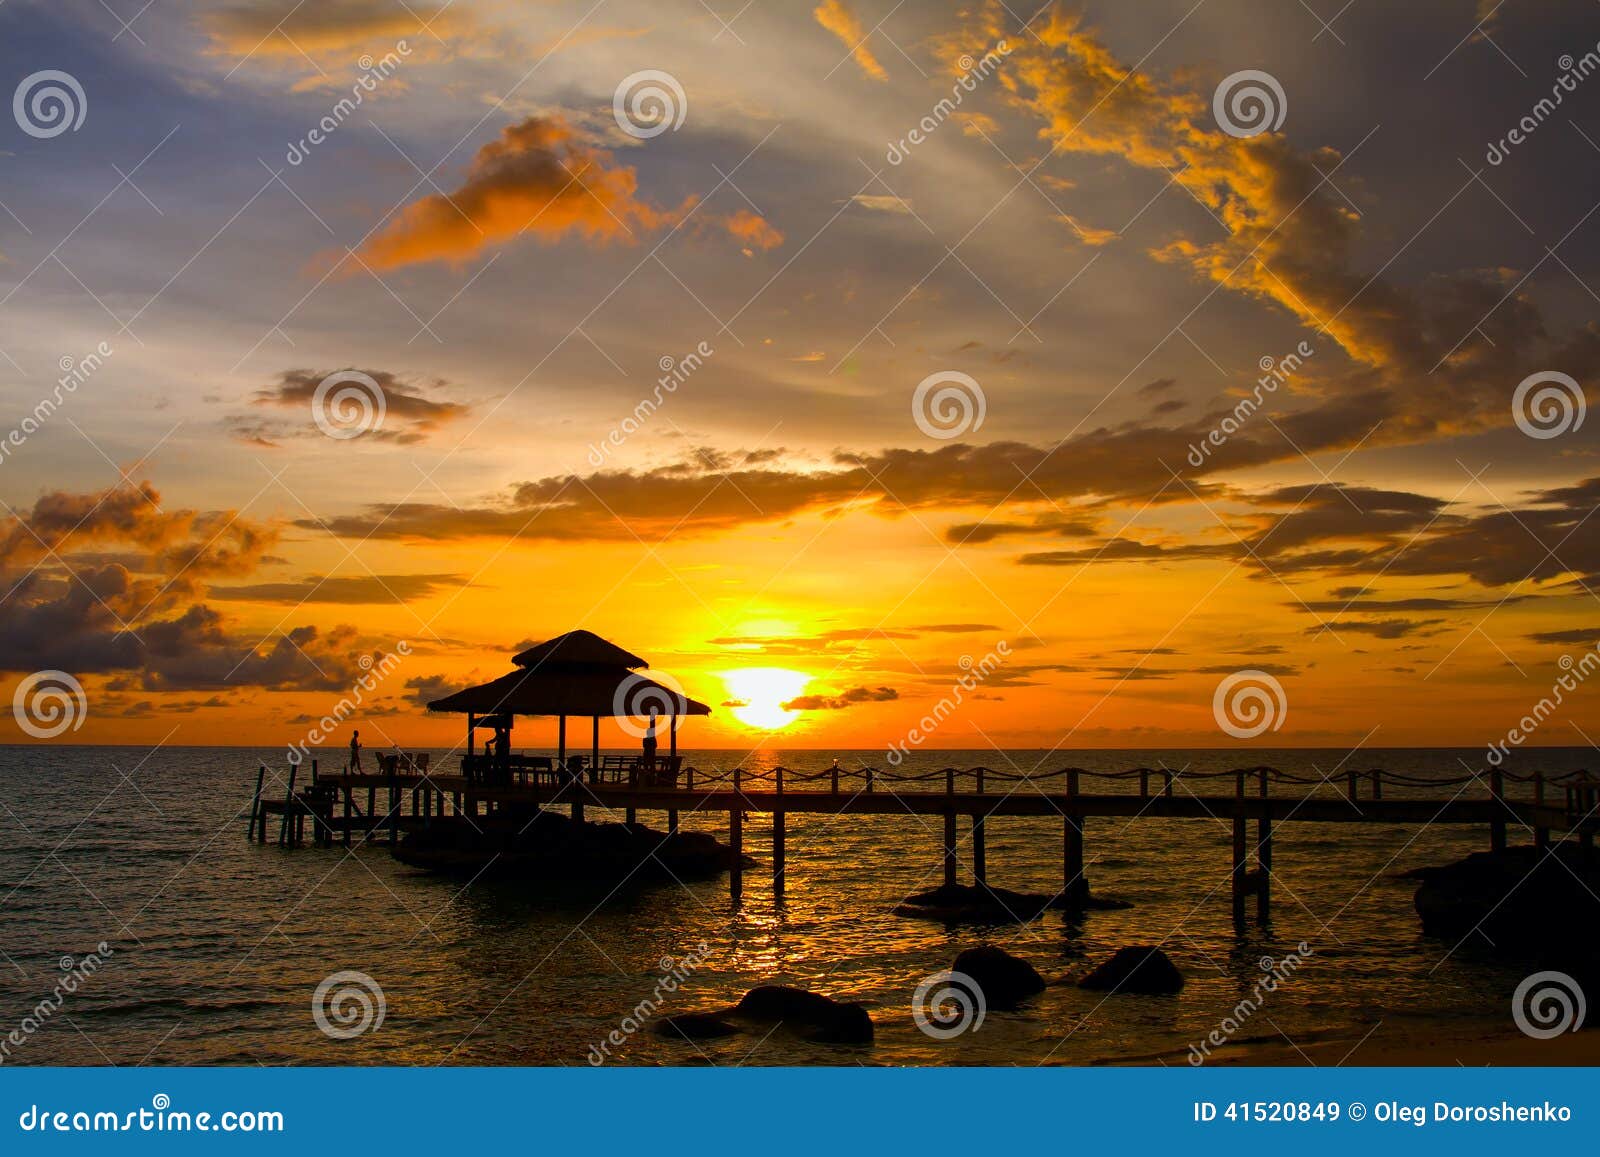 Sunset Over The Beach Thailand Stock Image Image Of Orange Golden